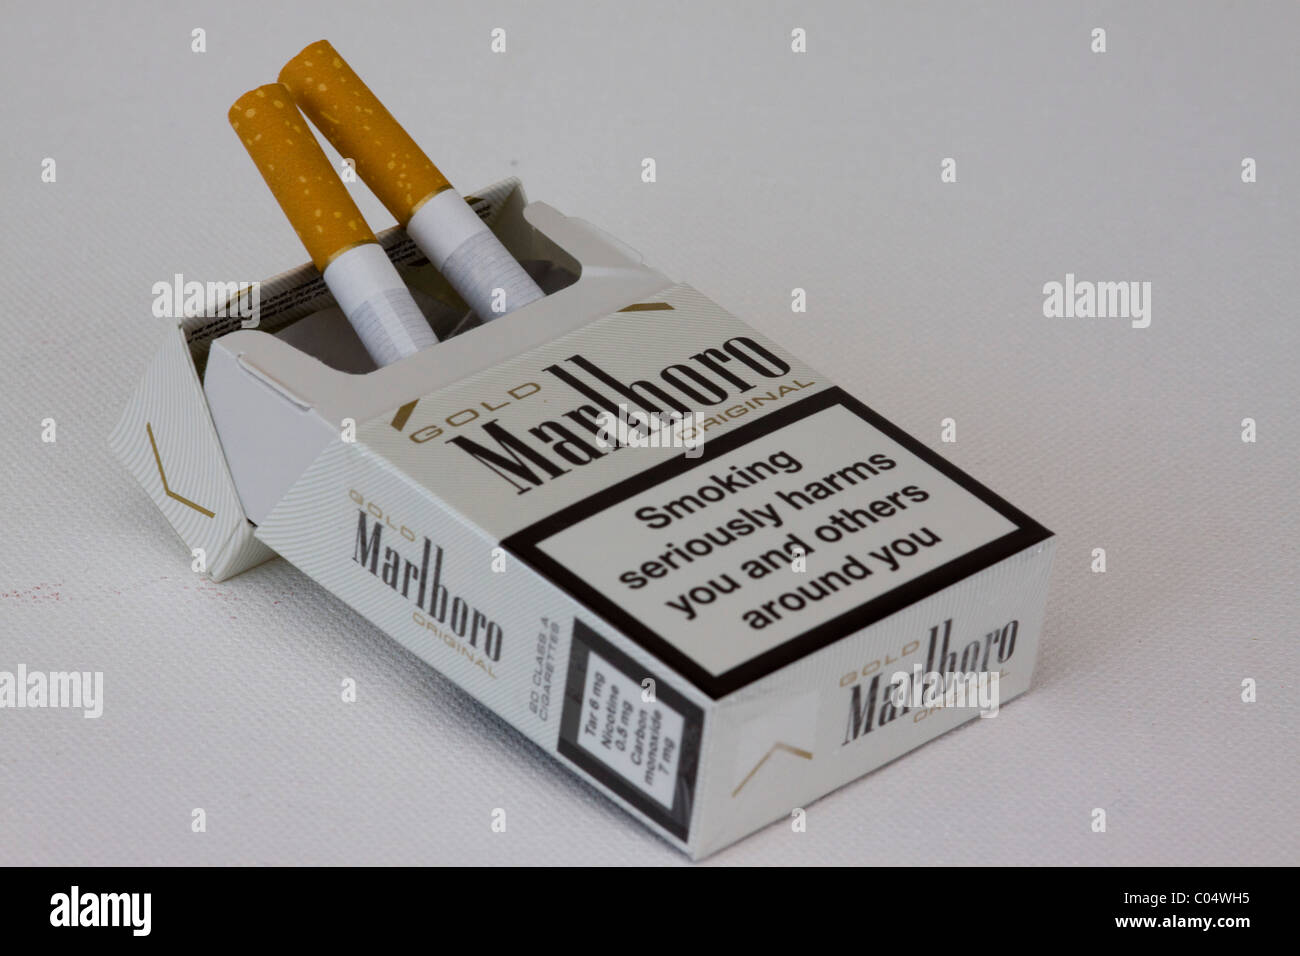 A Packet of Marlboro Cigarettes on White Stock Photo - Alamy